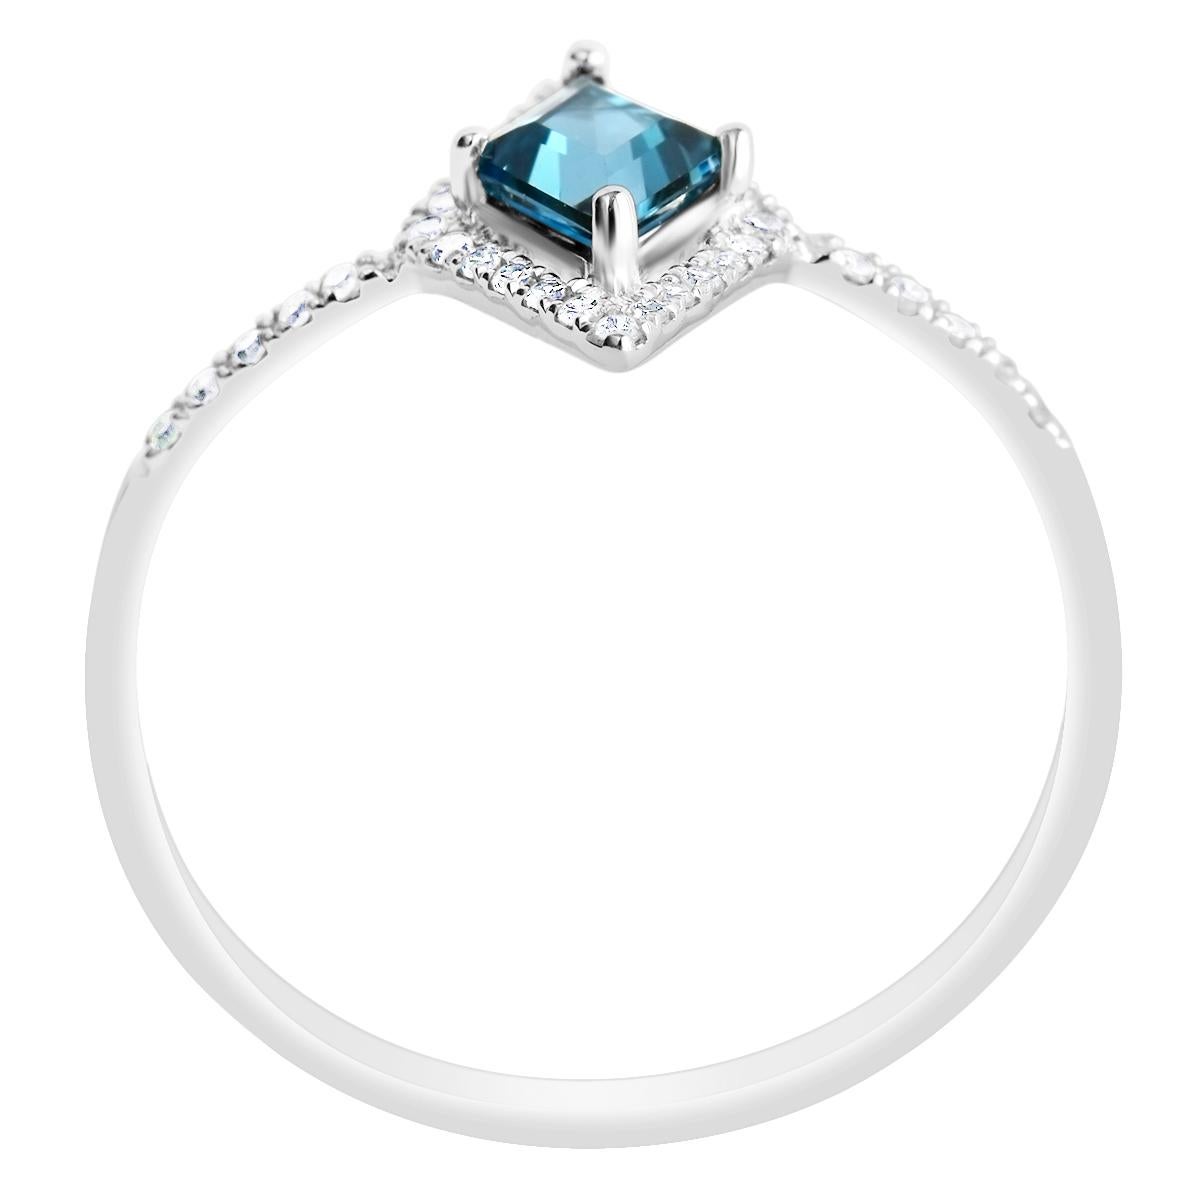 Blue Topaz Diamond Ring, Finest London Blue Topaz + 34 Diamonds Solid White Gold 1